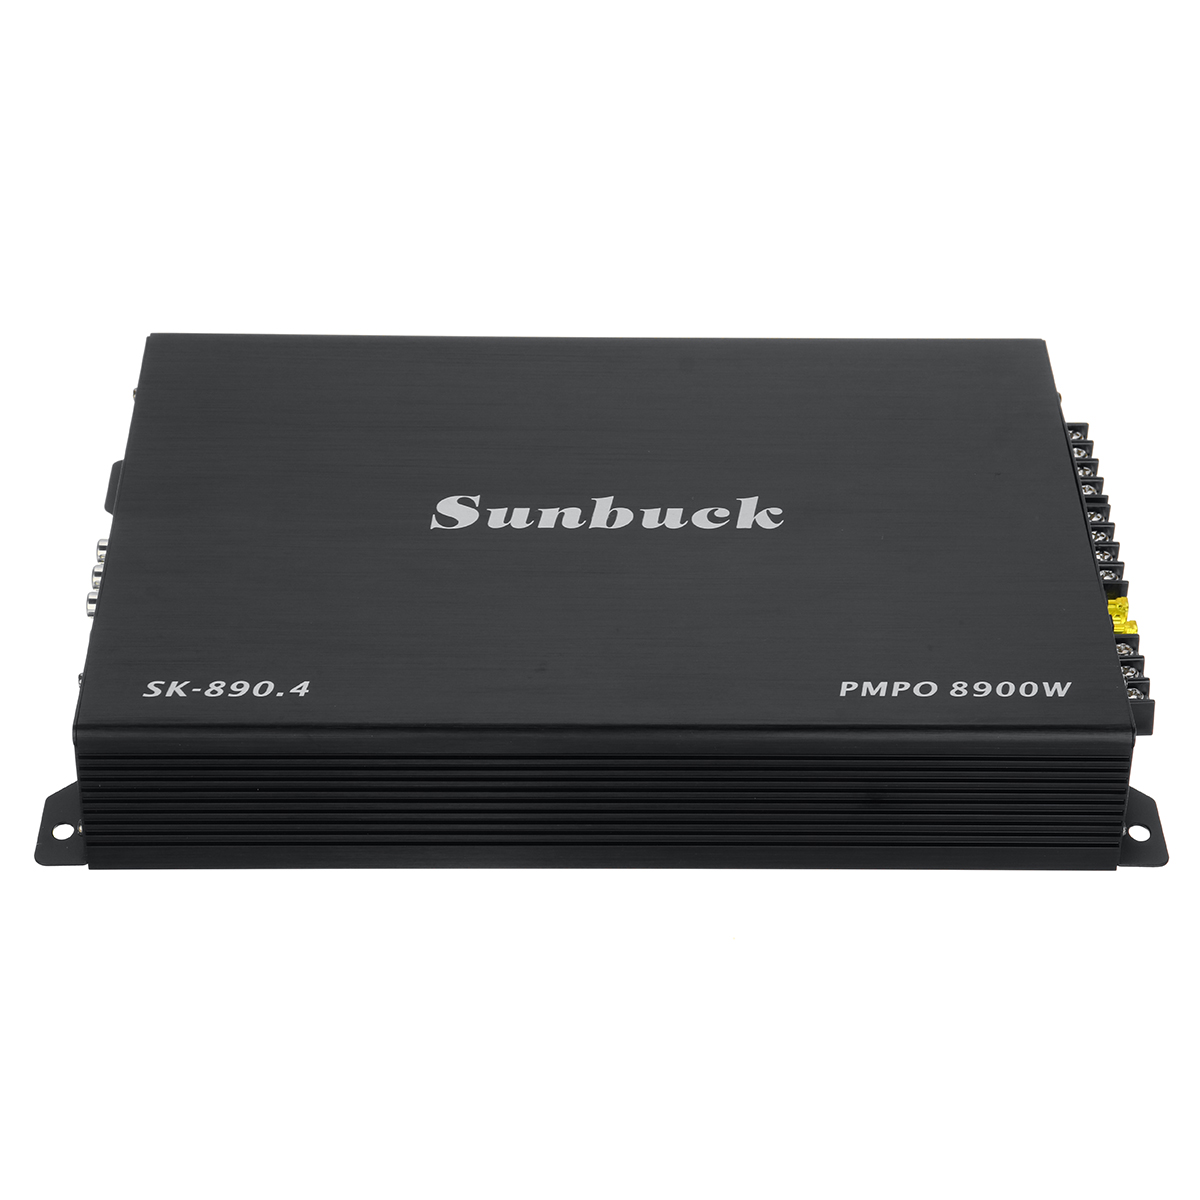 Sunbuck SK-890.4 12V 8900W Car Power Amplifier 4 Channel Class Slim Subwoofer Stereo Surround - Auto GoShop